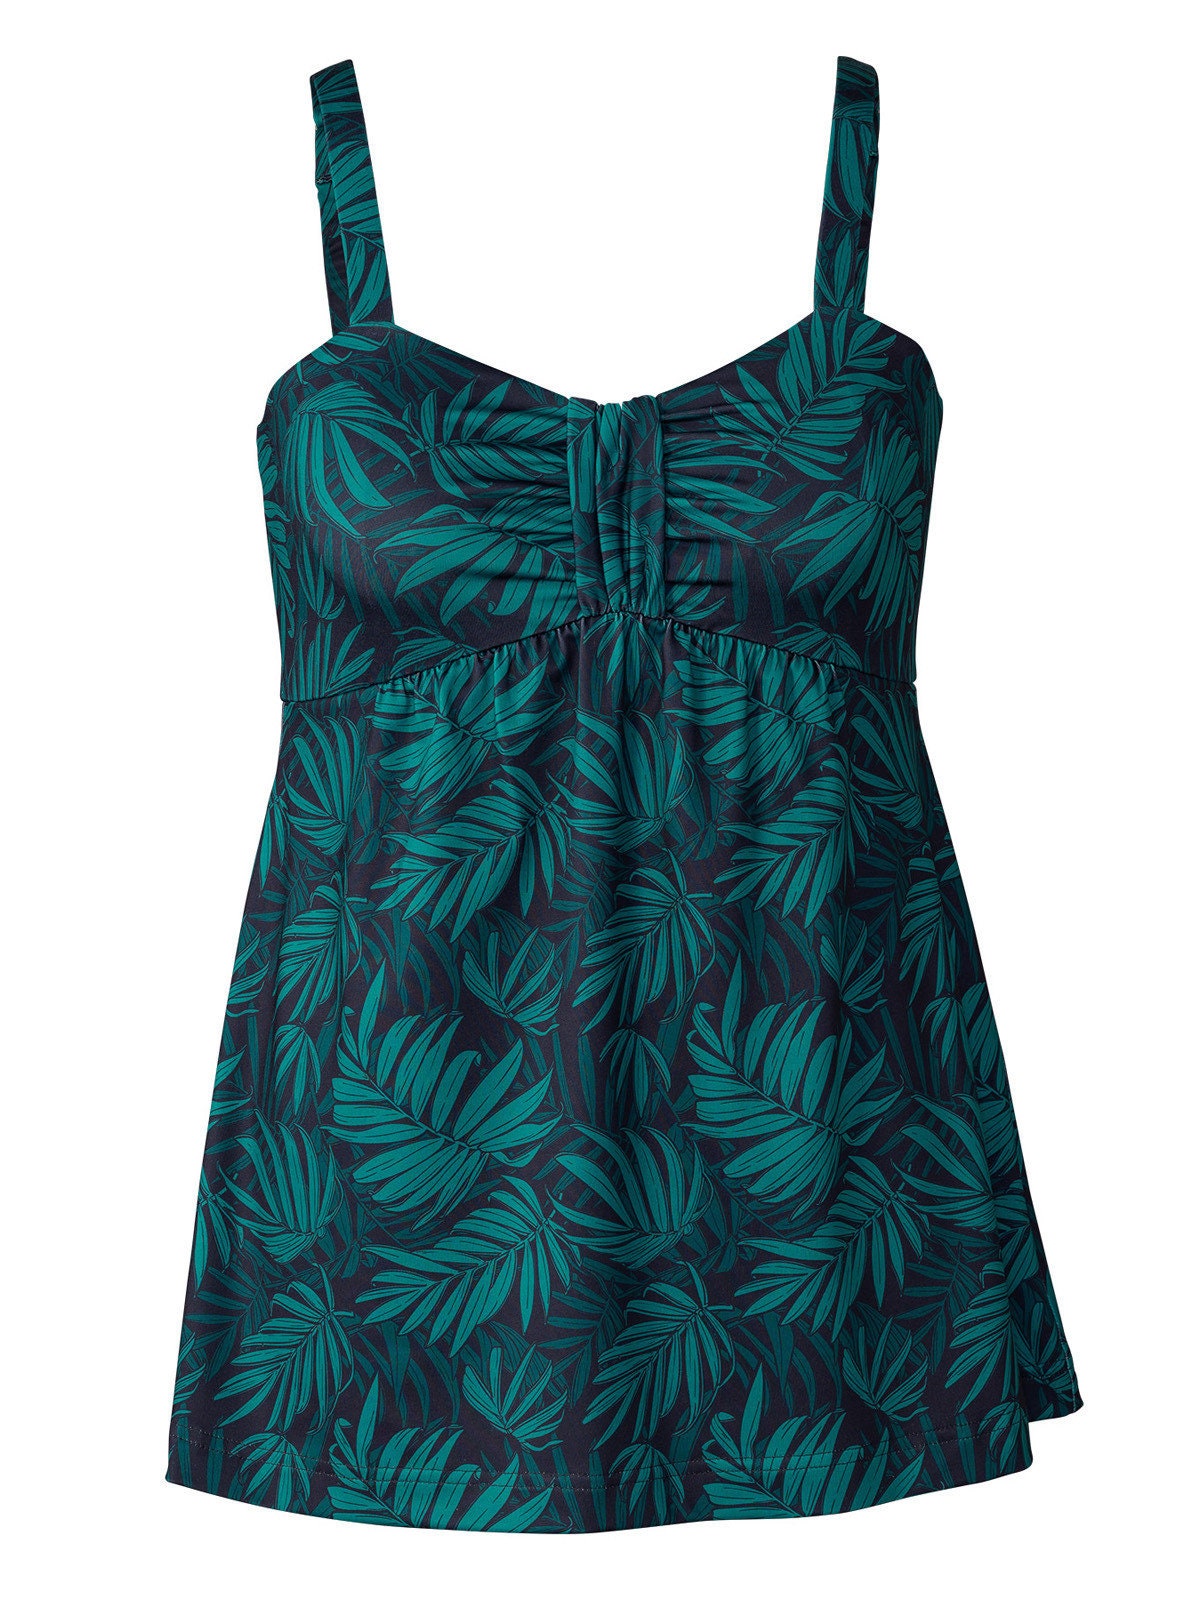 Plus Size Swimsuit Sewing Pattern Sizes XL 5XL Digital PDF Sewing ...